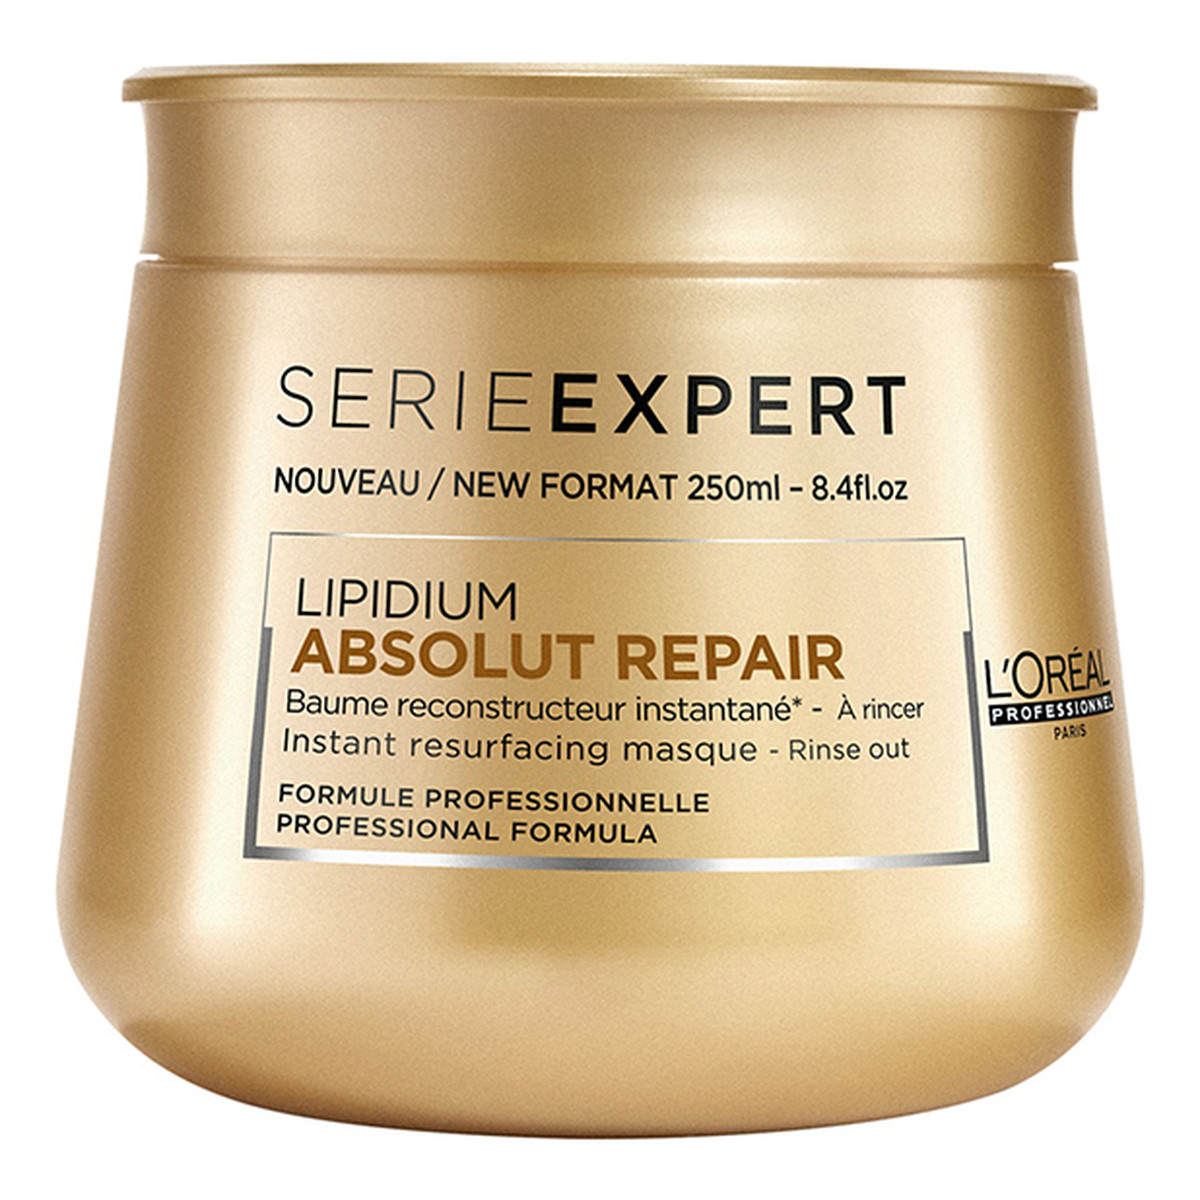 L'Oreal Paris Absolut repair lipidium maska z lipidami nawilżająco-regenerująca włosy 250ml